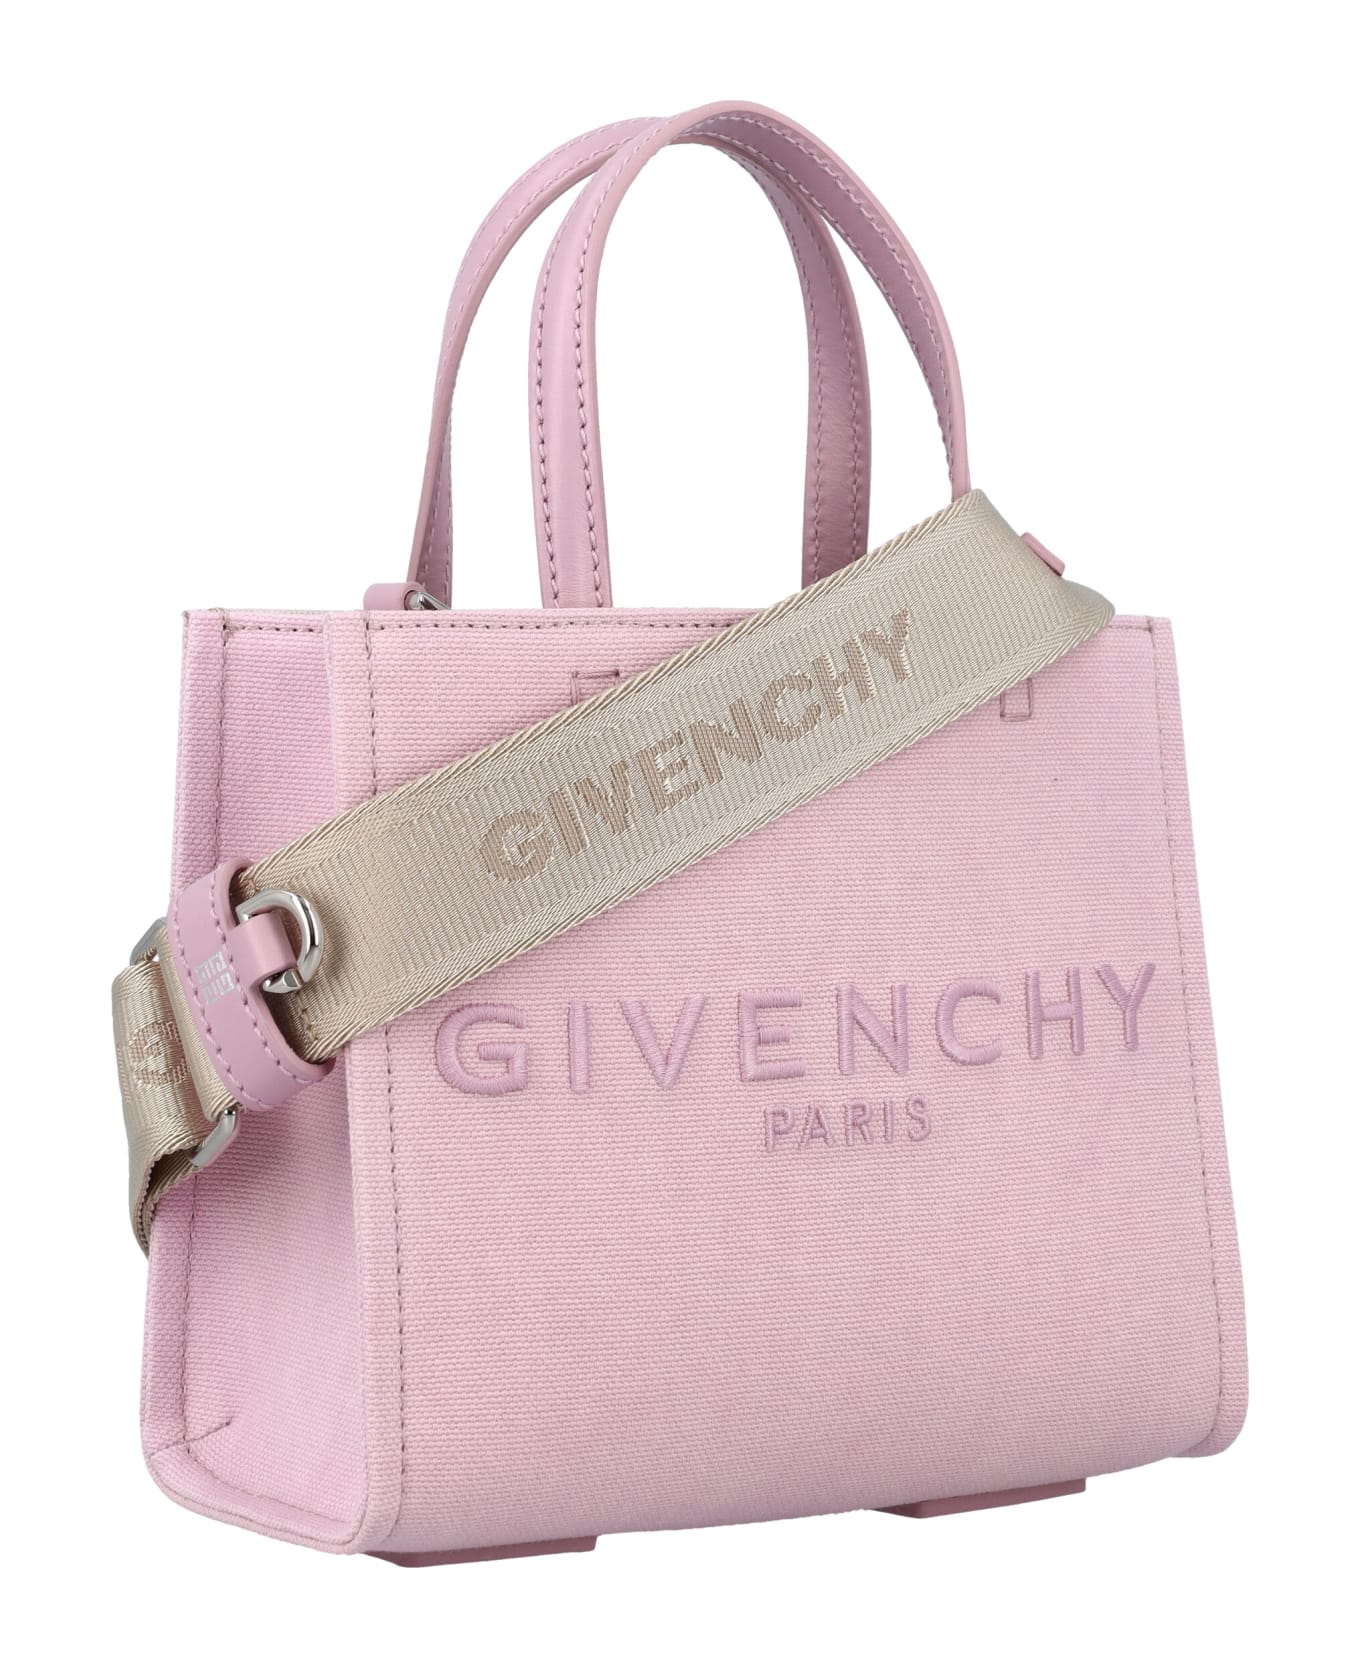 Givenchy G-tote Mini Tote Bag - OLD PINK